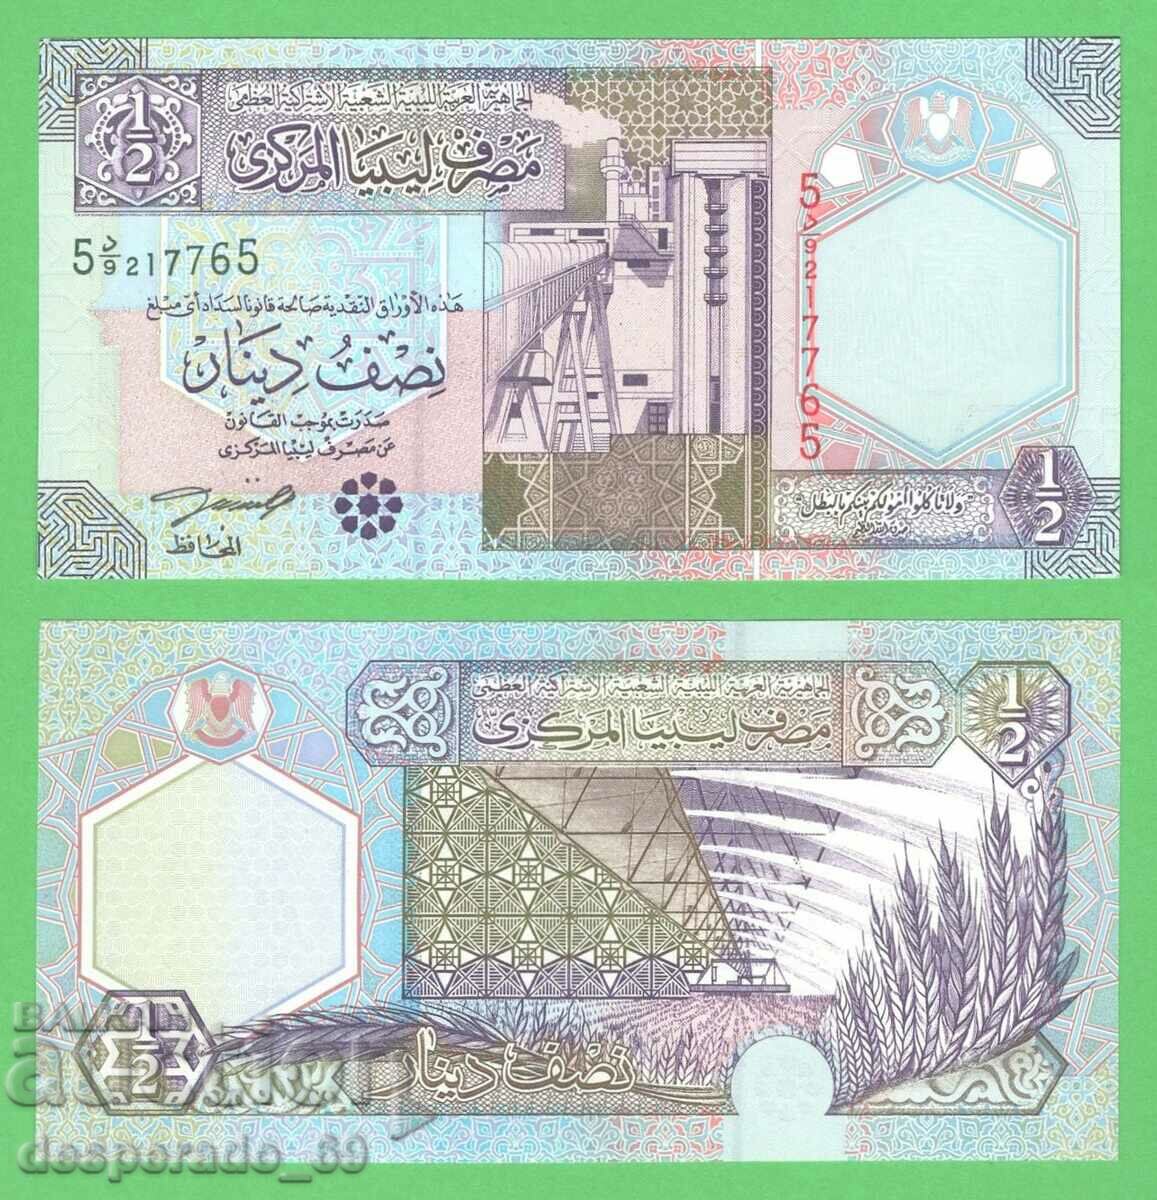 (¯`'•.¸ LIBIA 1/2 dinar 2002 UNC ¸.•'´¯)